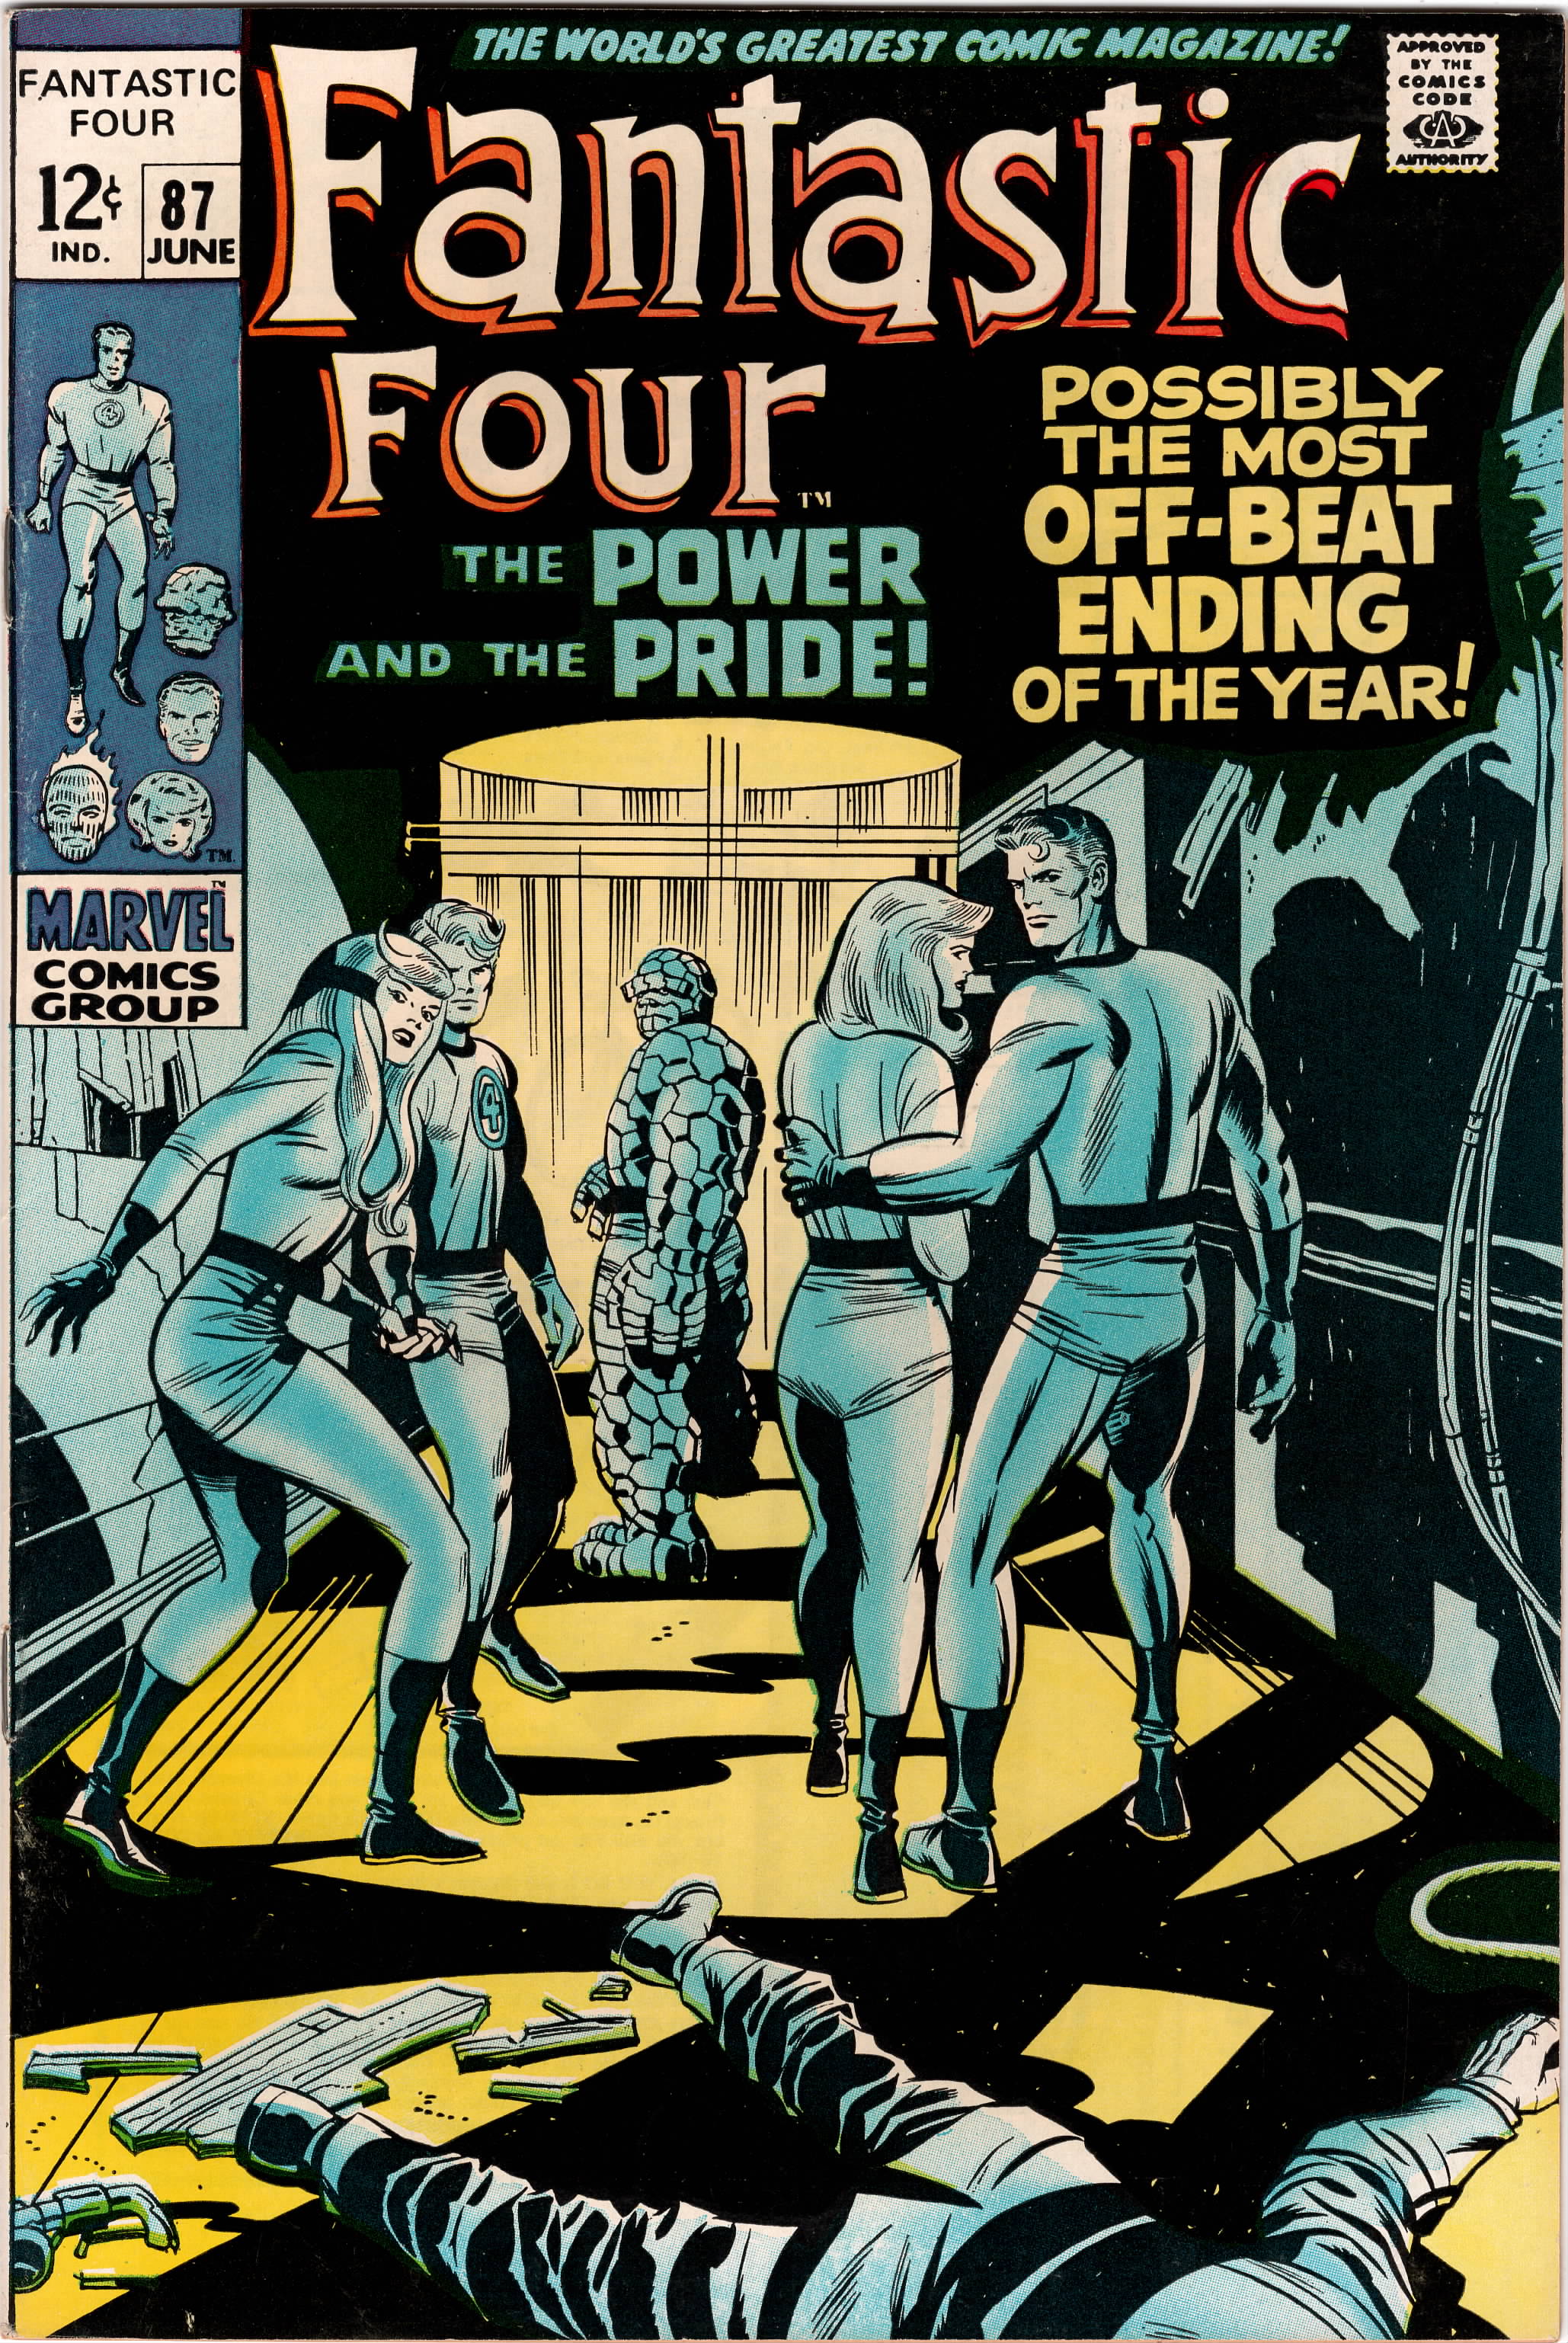 Fantastic Four #087